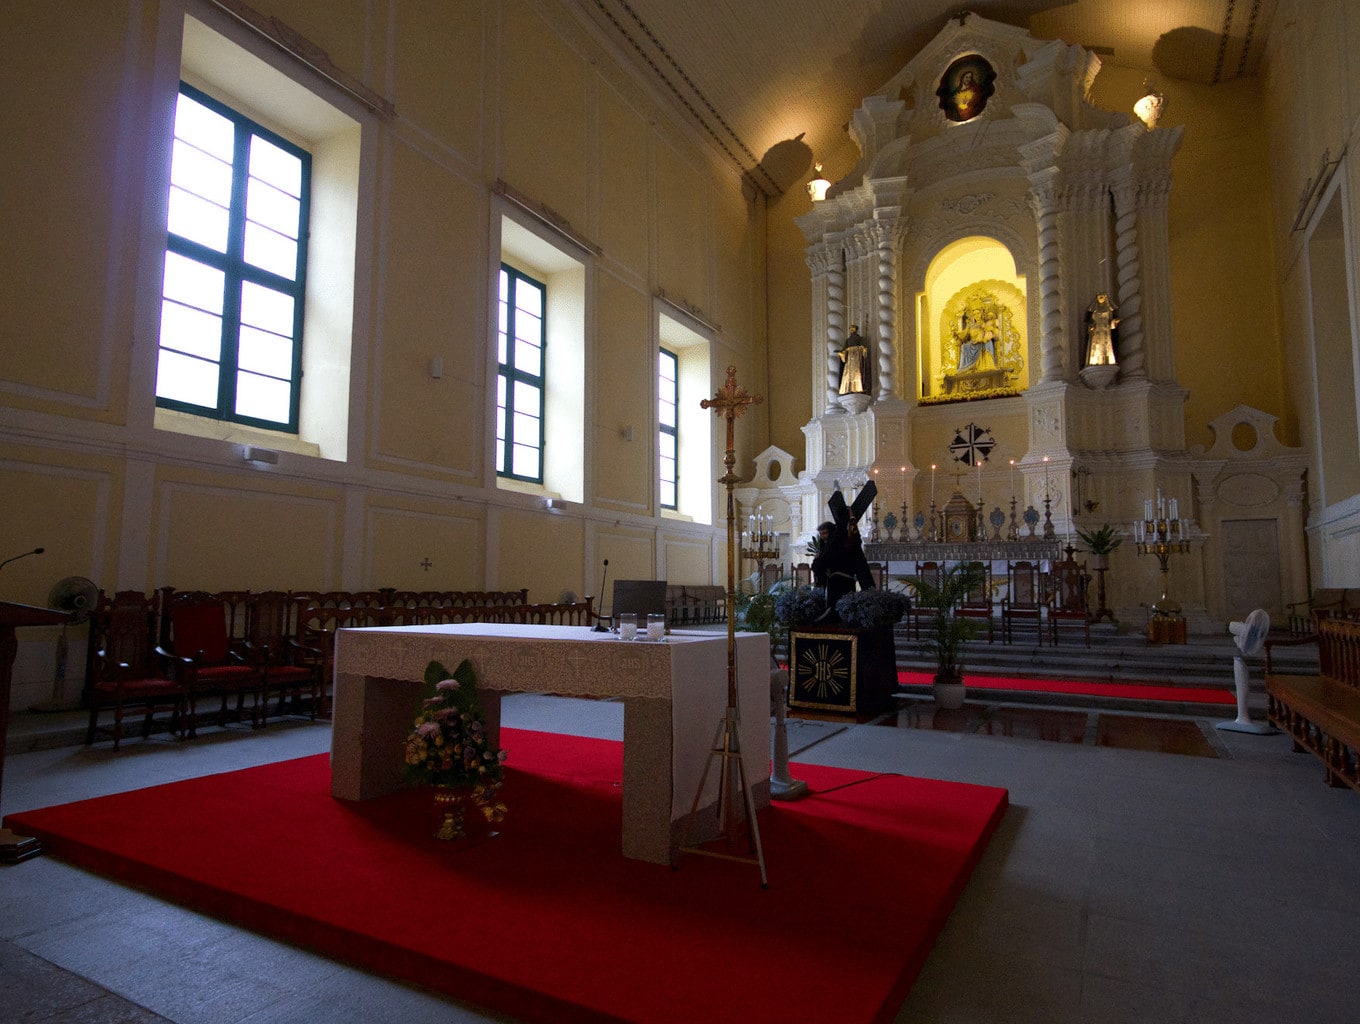 "Church of St. Dominic inside"